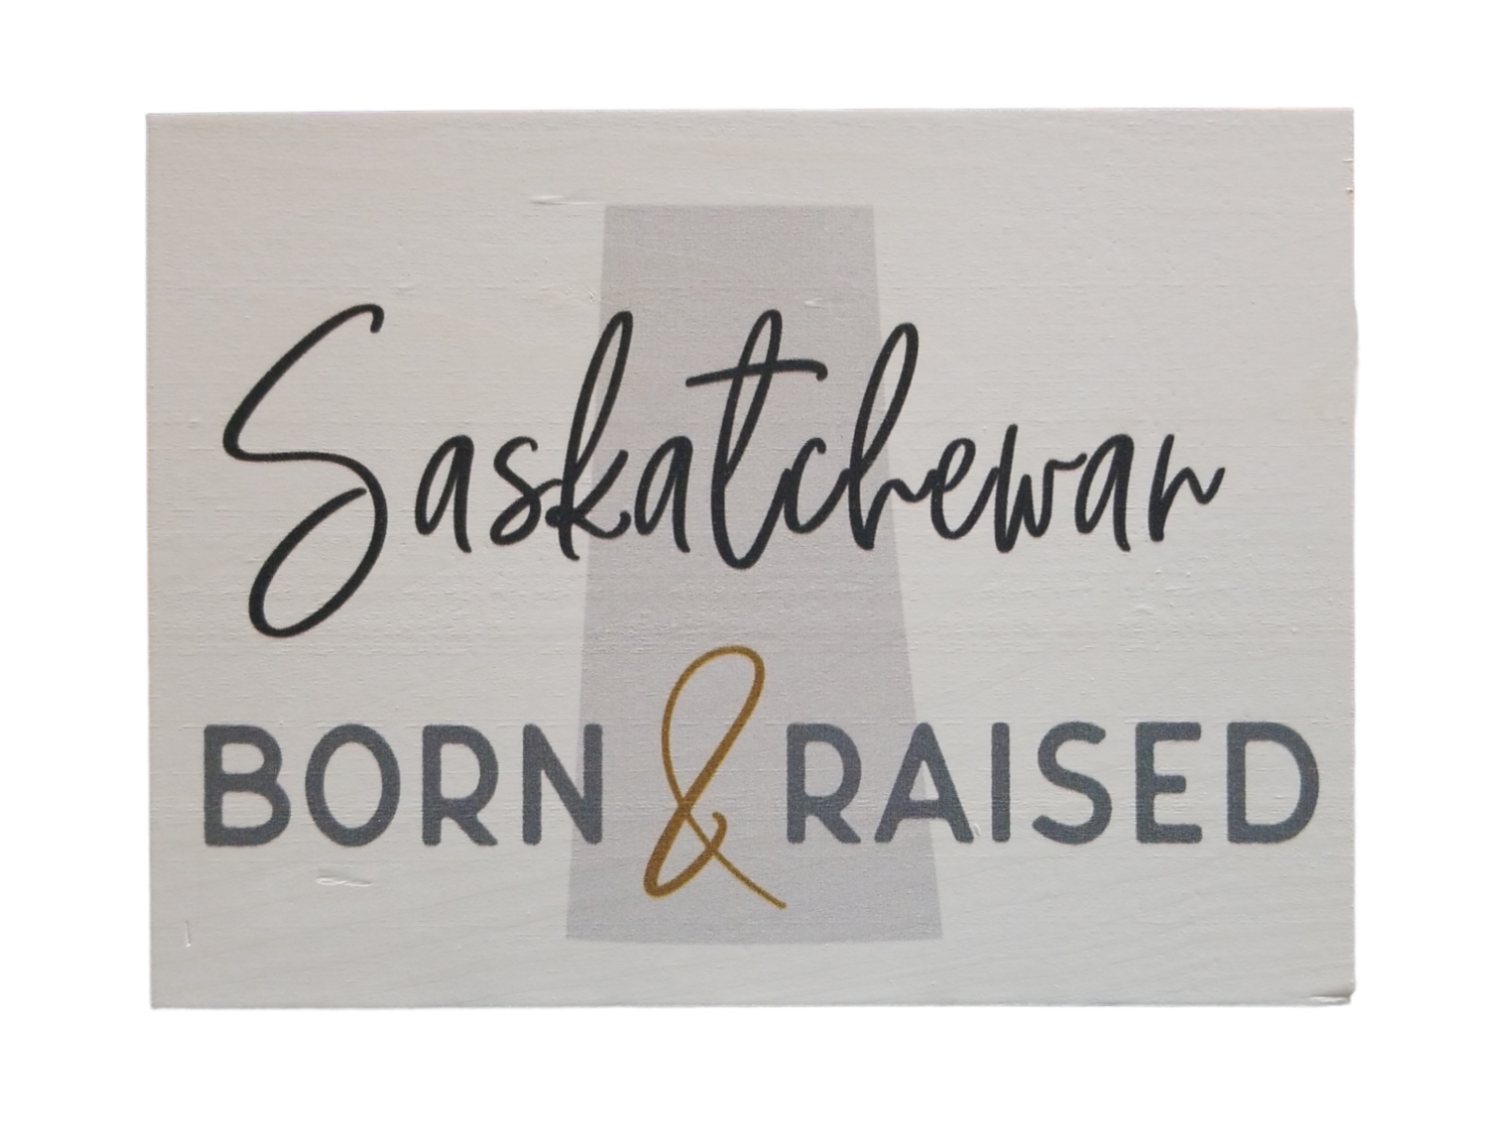 &quot;Saskatchewan Born &amp; Raised&quot; Small Wood Block Sign